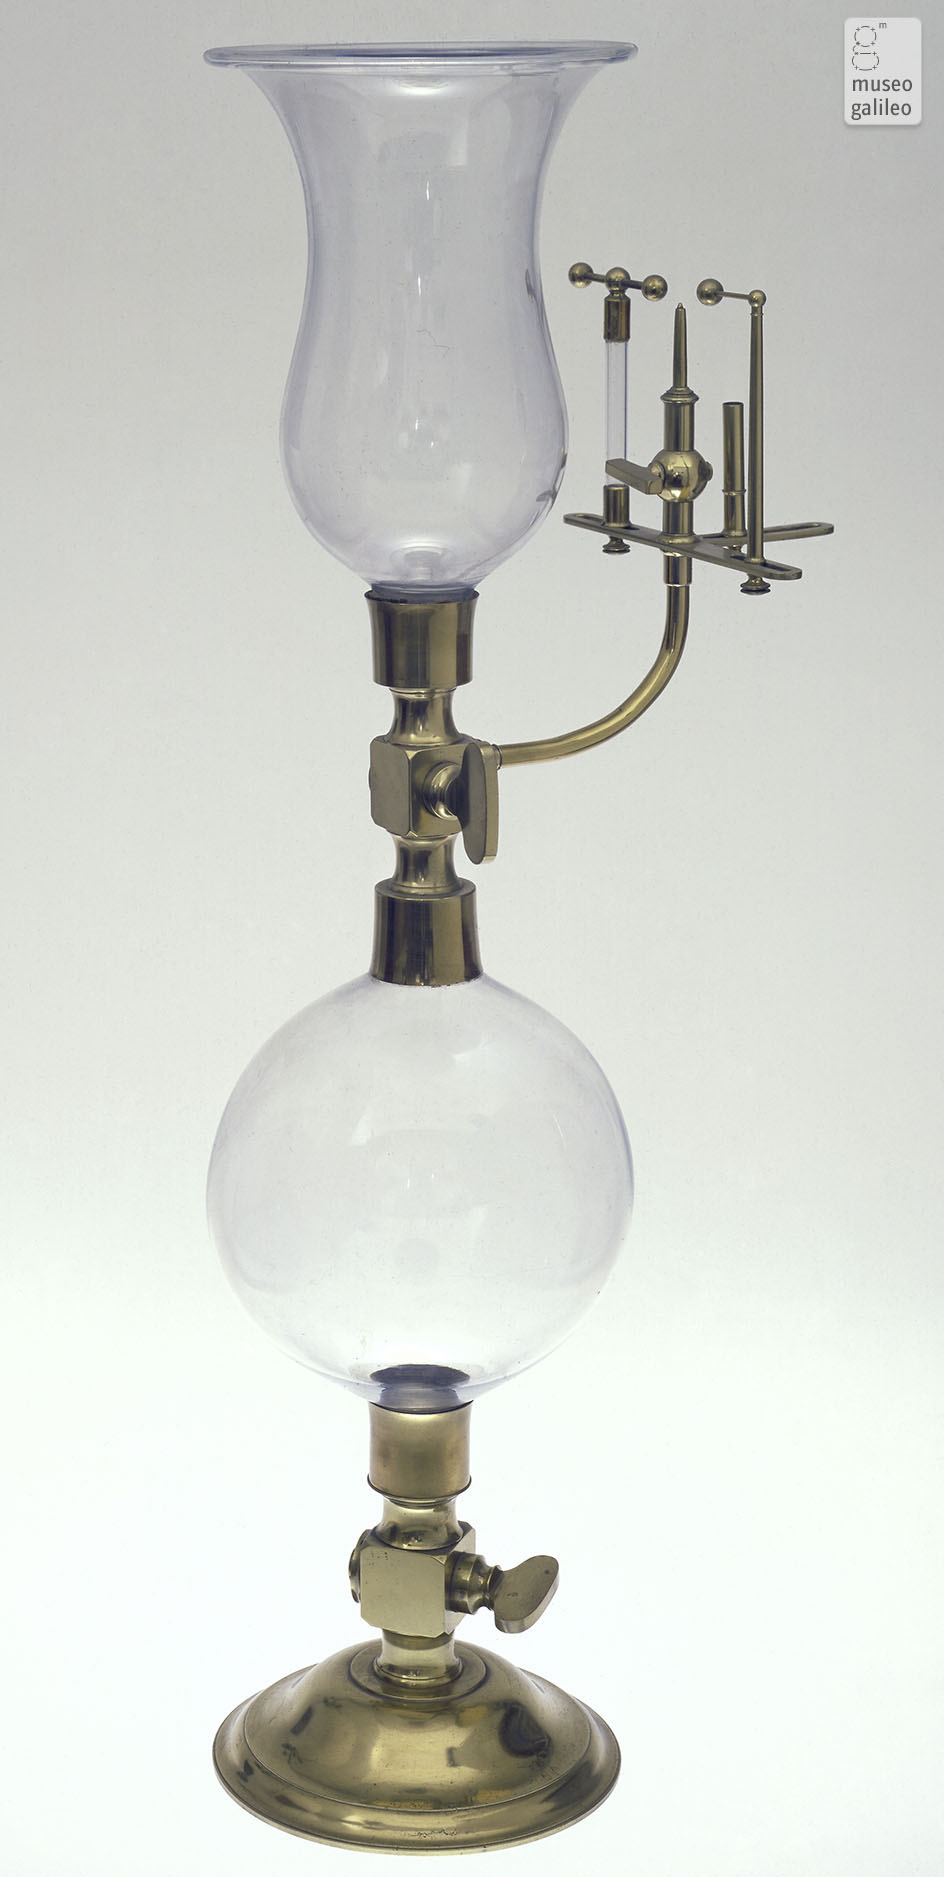 Volta hydrogen lamp (Inv. 1243)